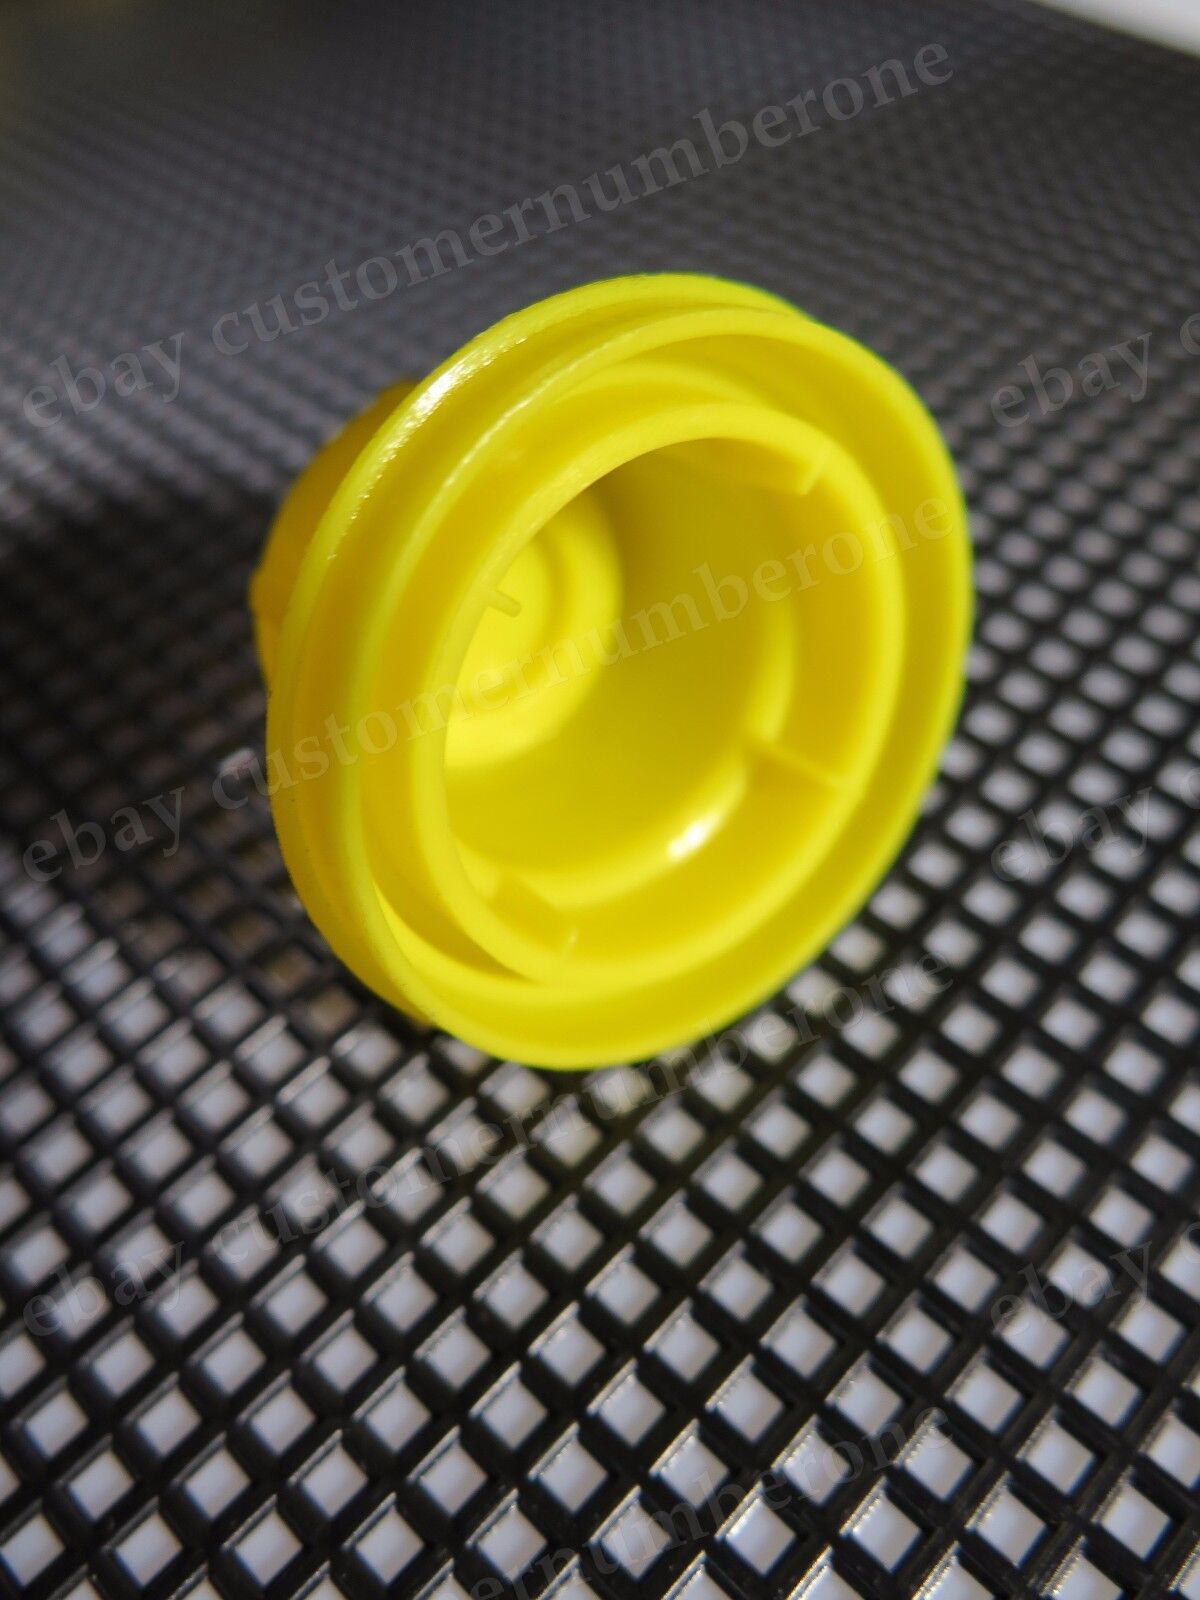 25 Blitz Gas Can Yellow Spout Caps fits part 900302 900092 900094 Original Style Aftermarket cno50 - фотография #8